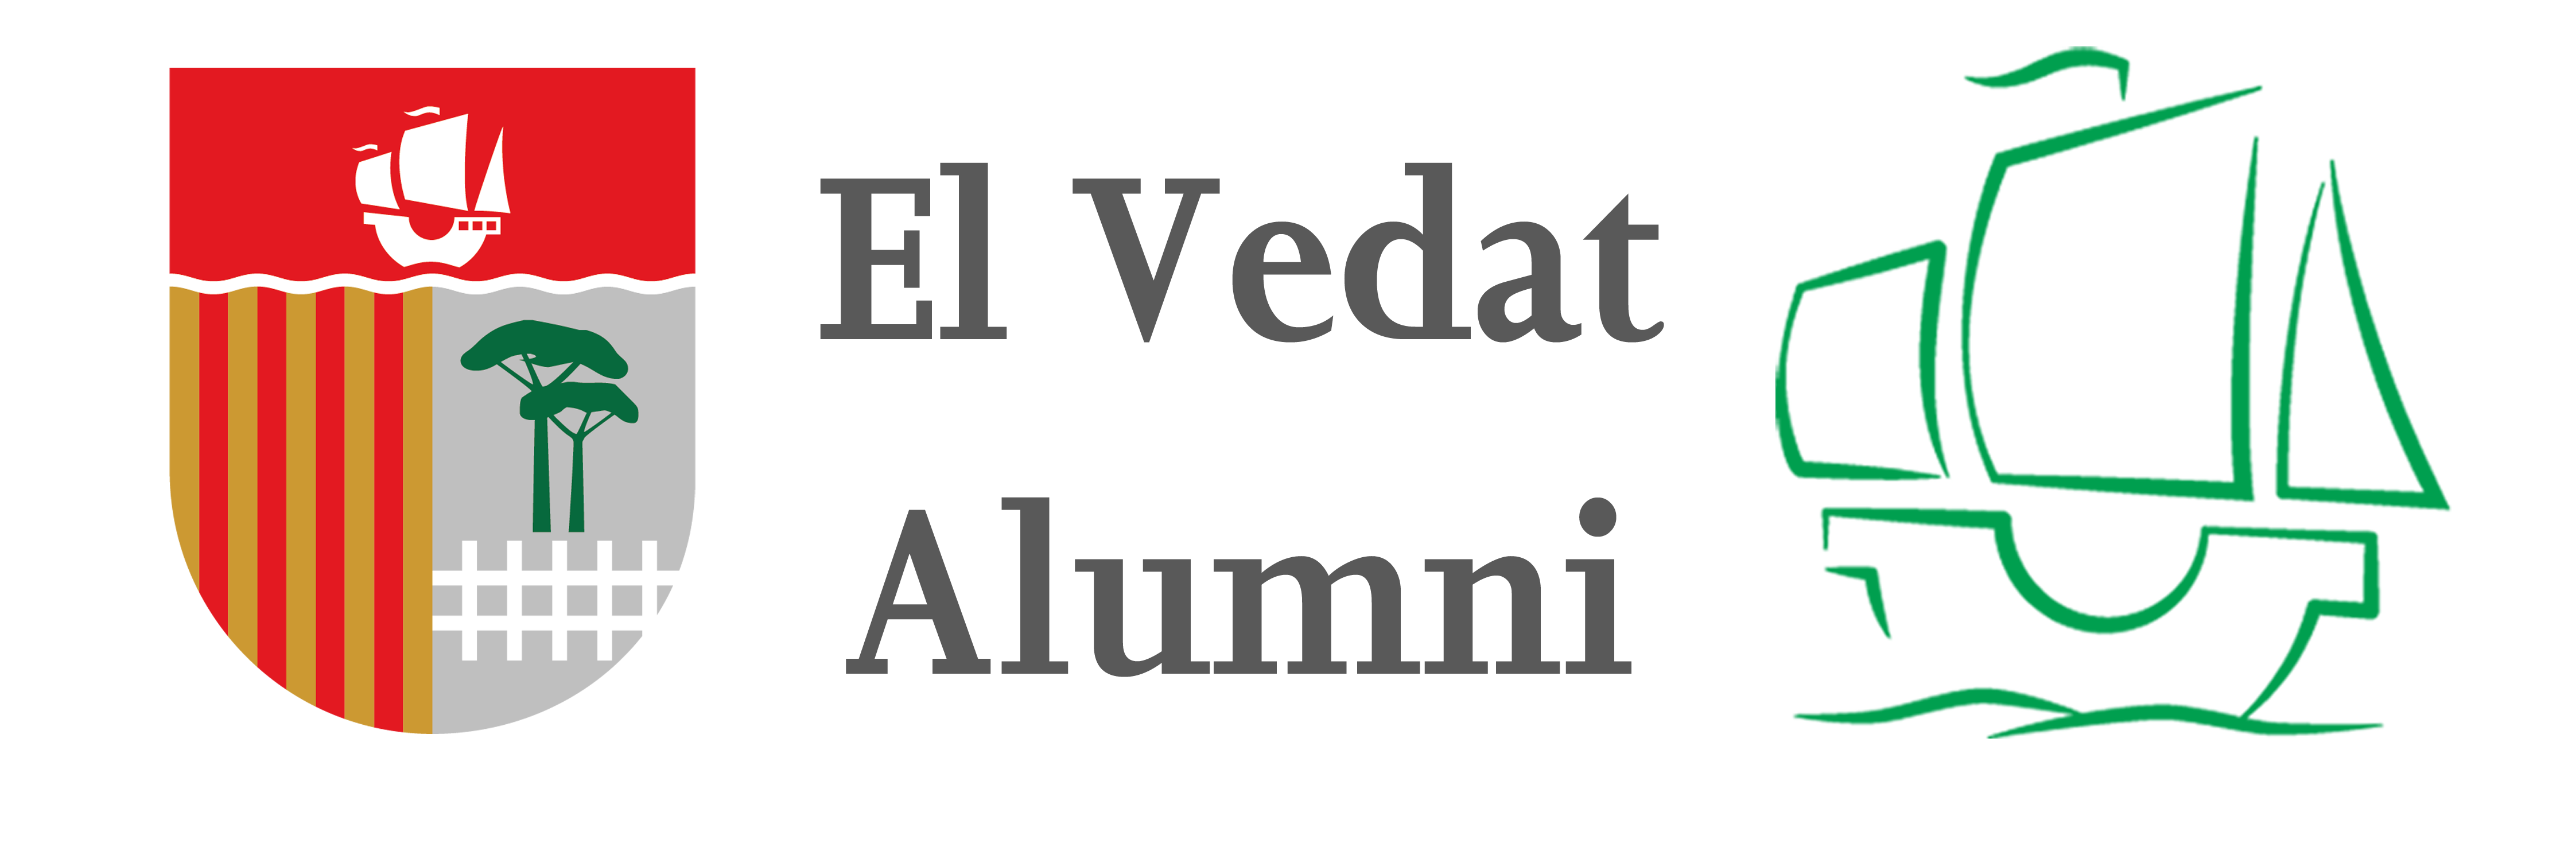 El Vedat Alumni